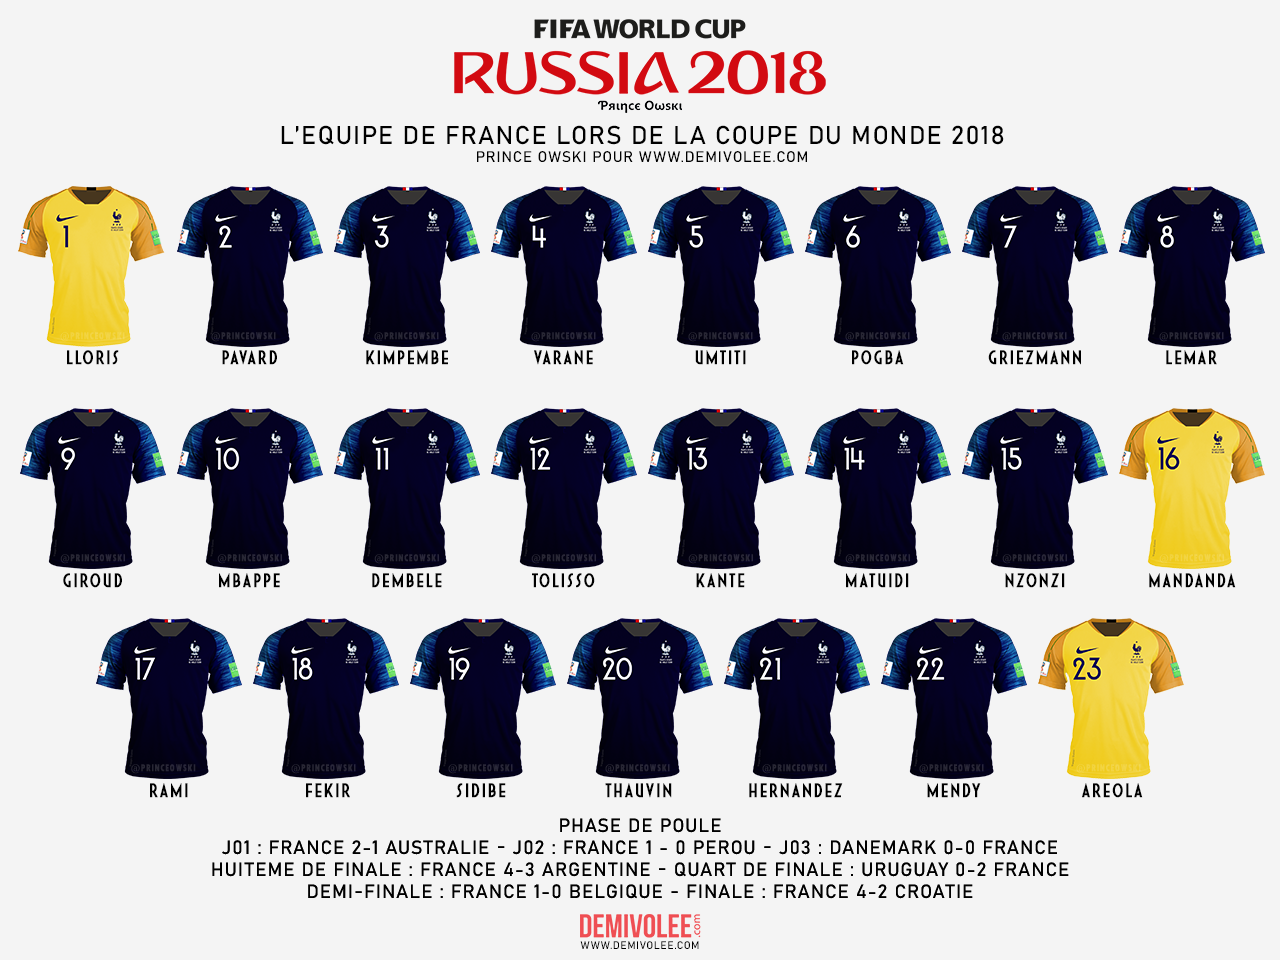 Les maillots de l'équipe de France en 2018